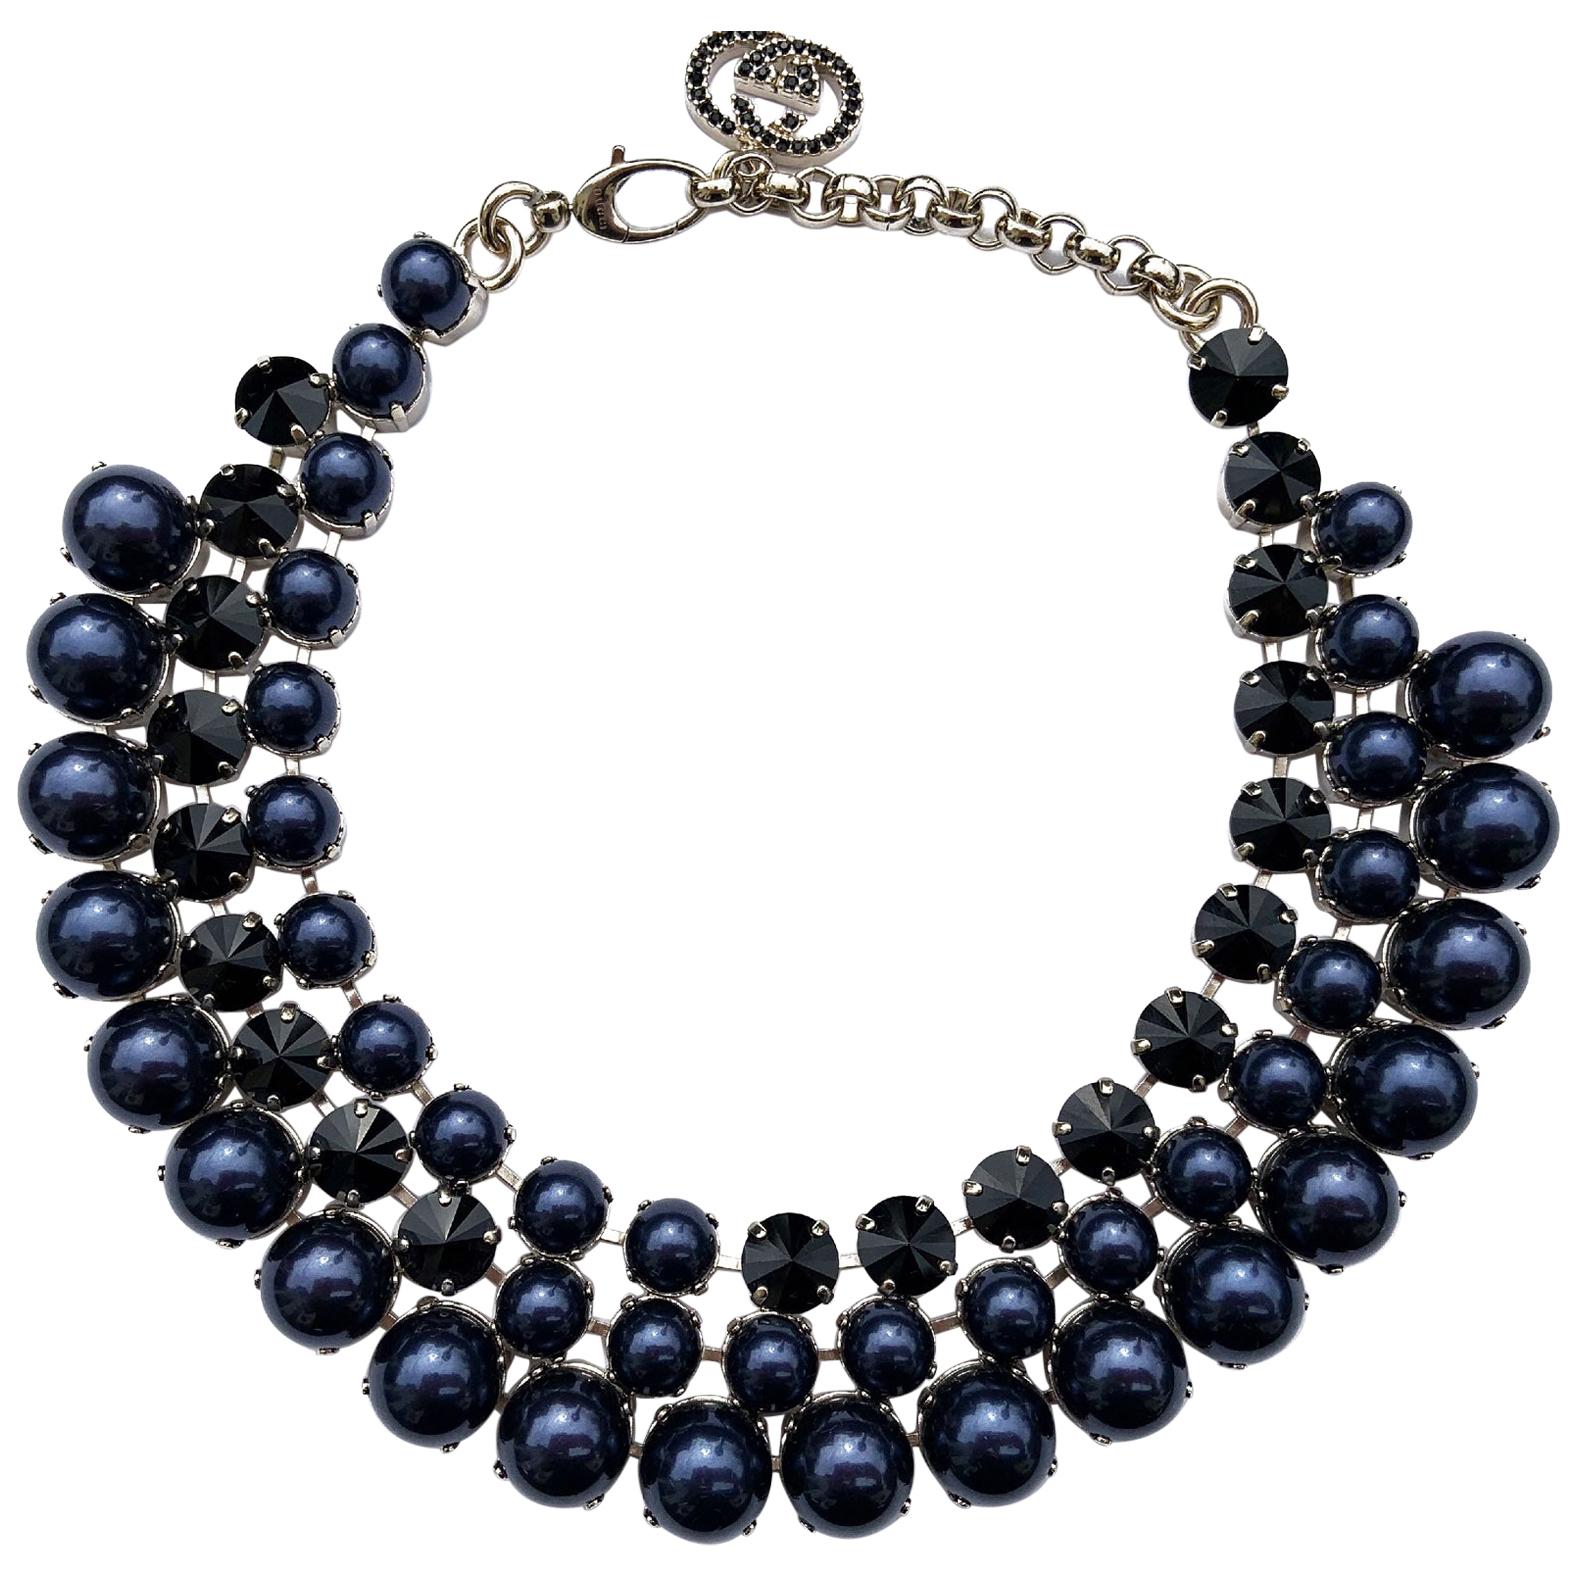 Nuevo Collar Gucci Azul Marino Efecto Perla con Cristales Swarovski Negros 